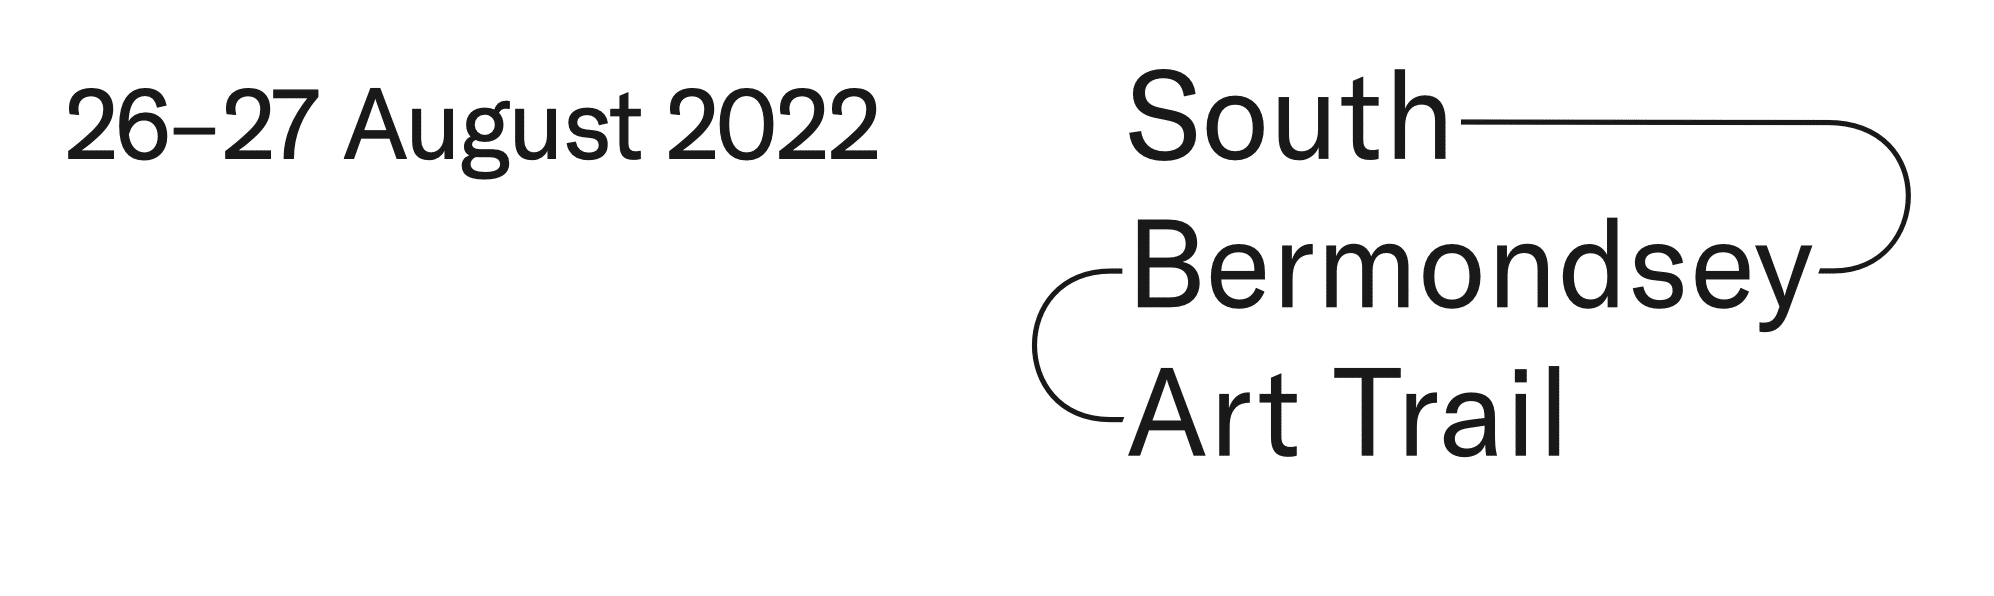 South Bermondsey Art Trail: 26th & 27th August 2022